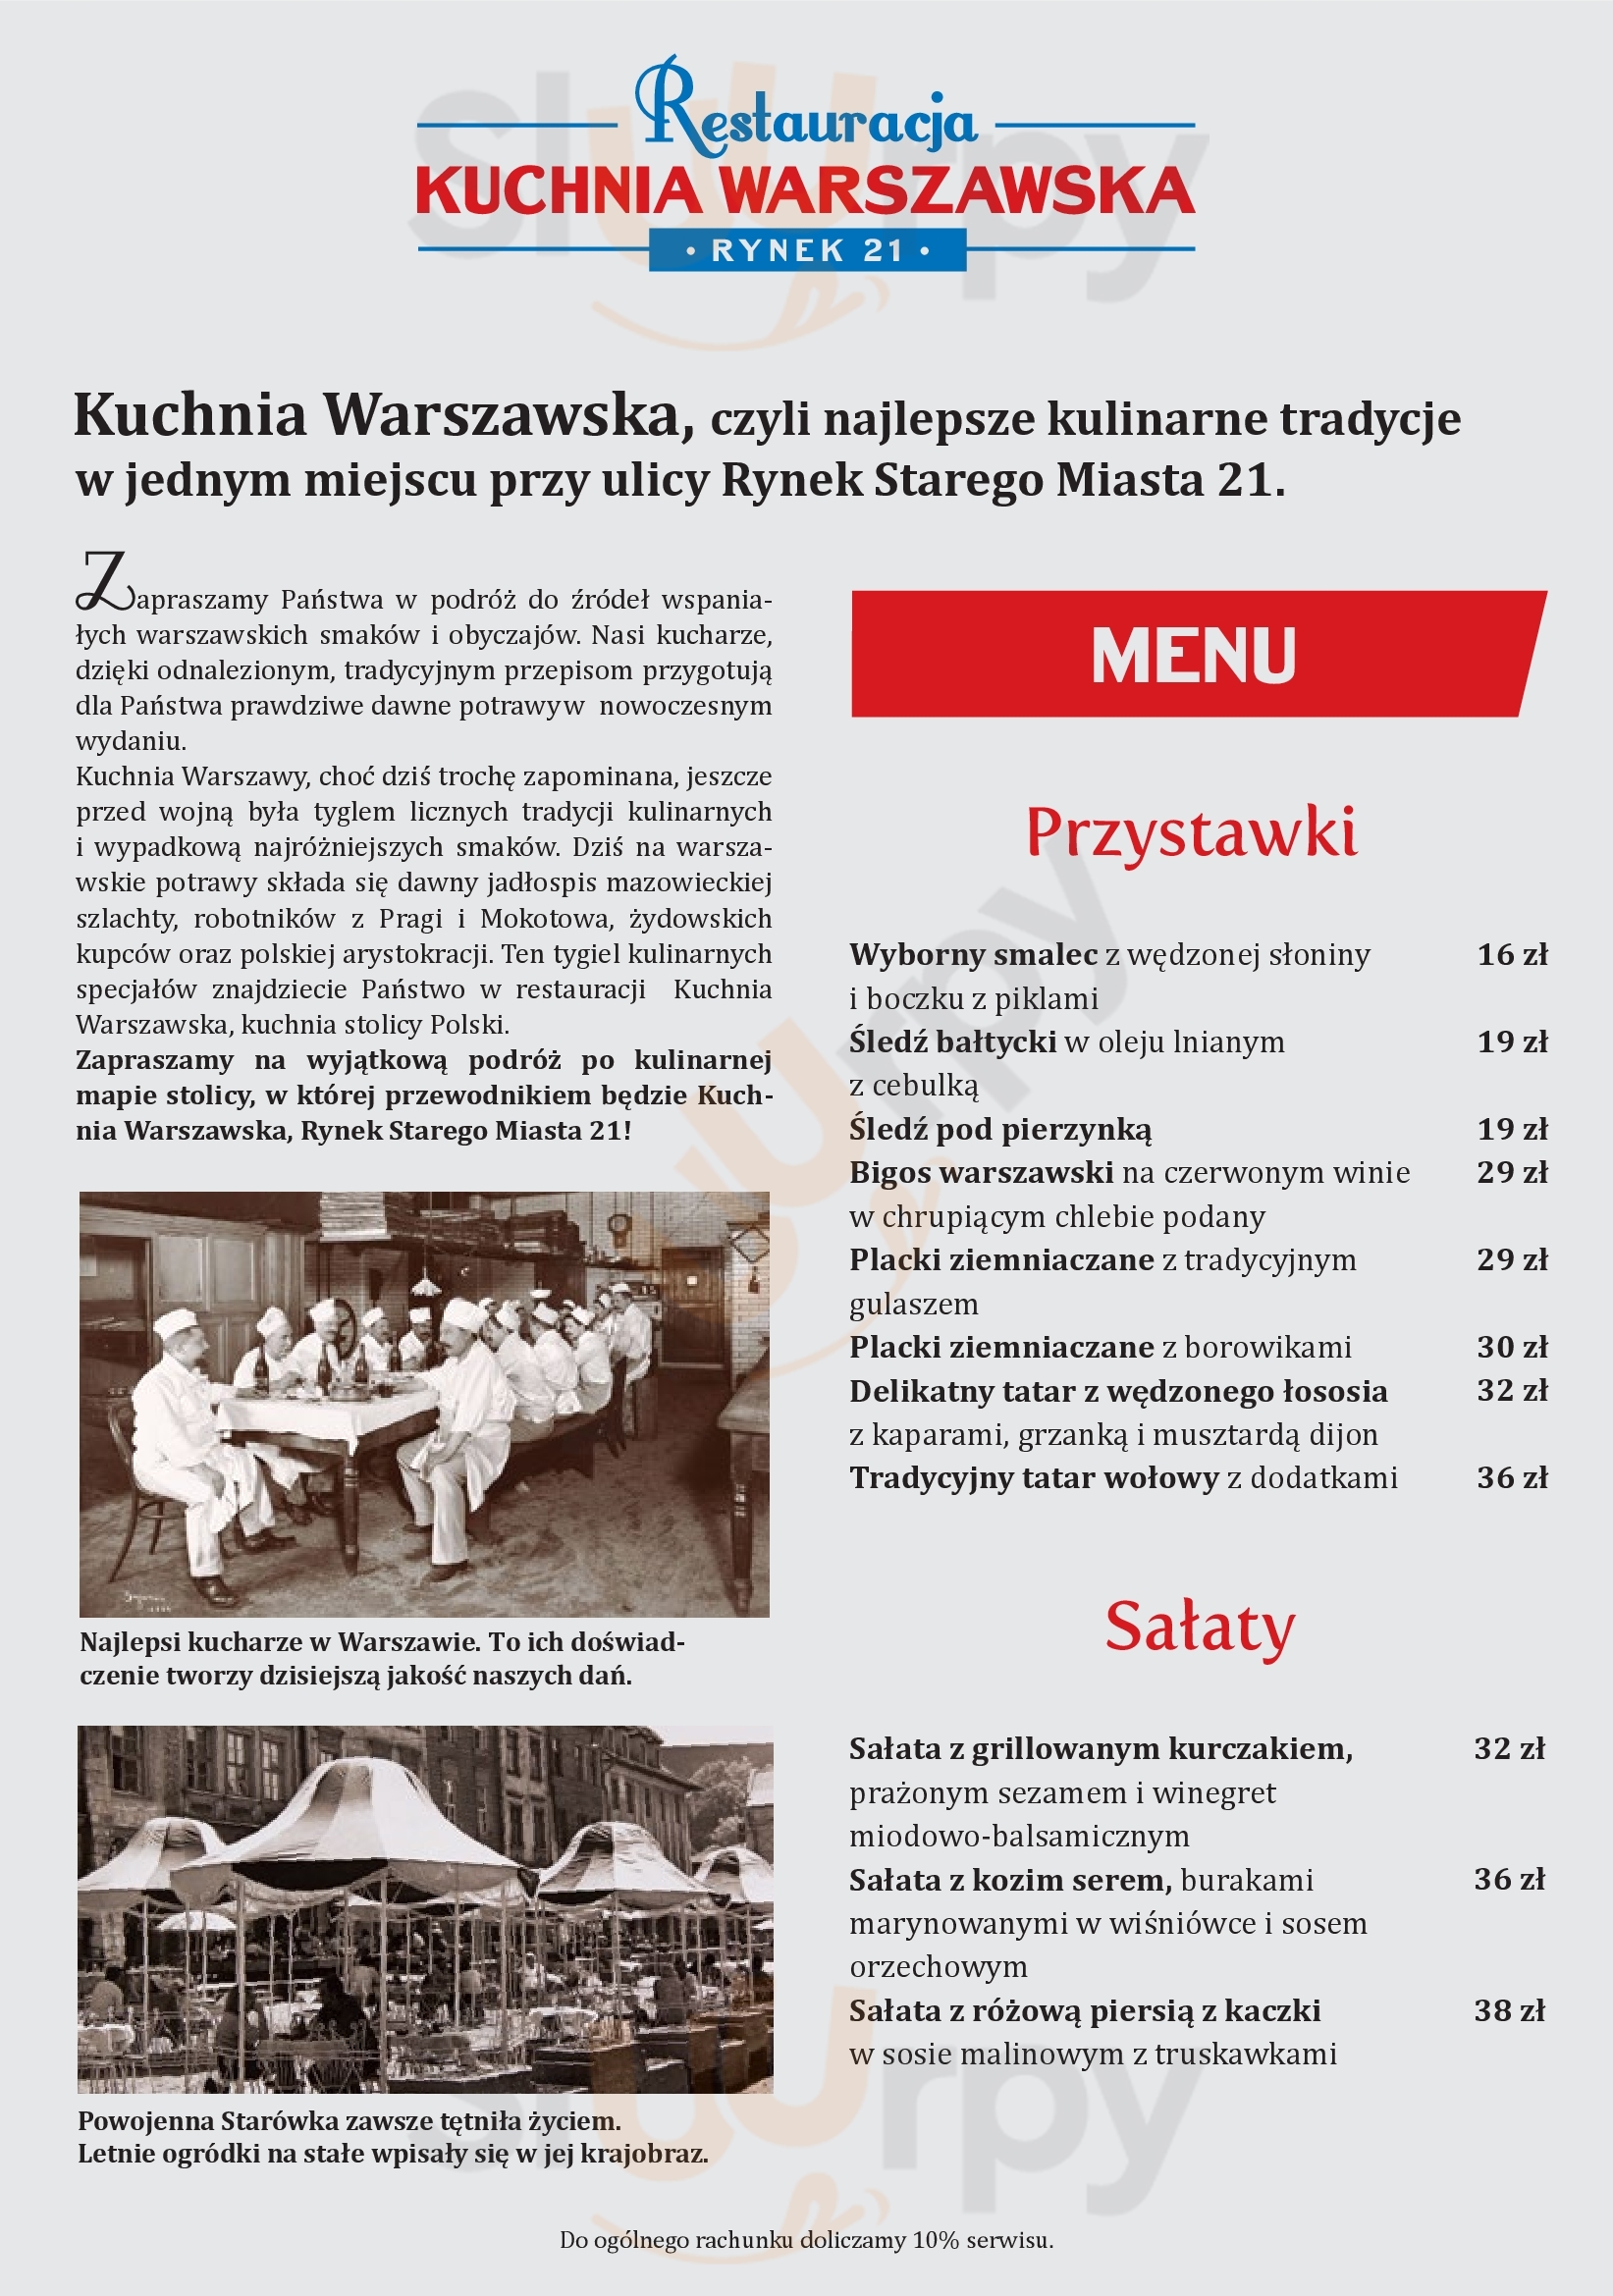 Restauracja Kuchnia Warszawska Warszawa Menu - 1